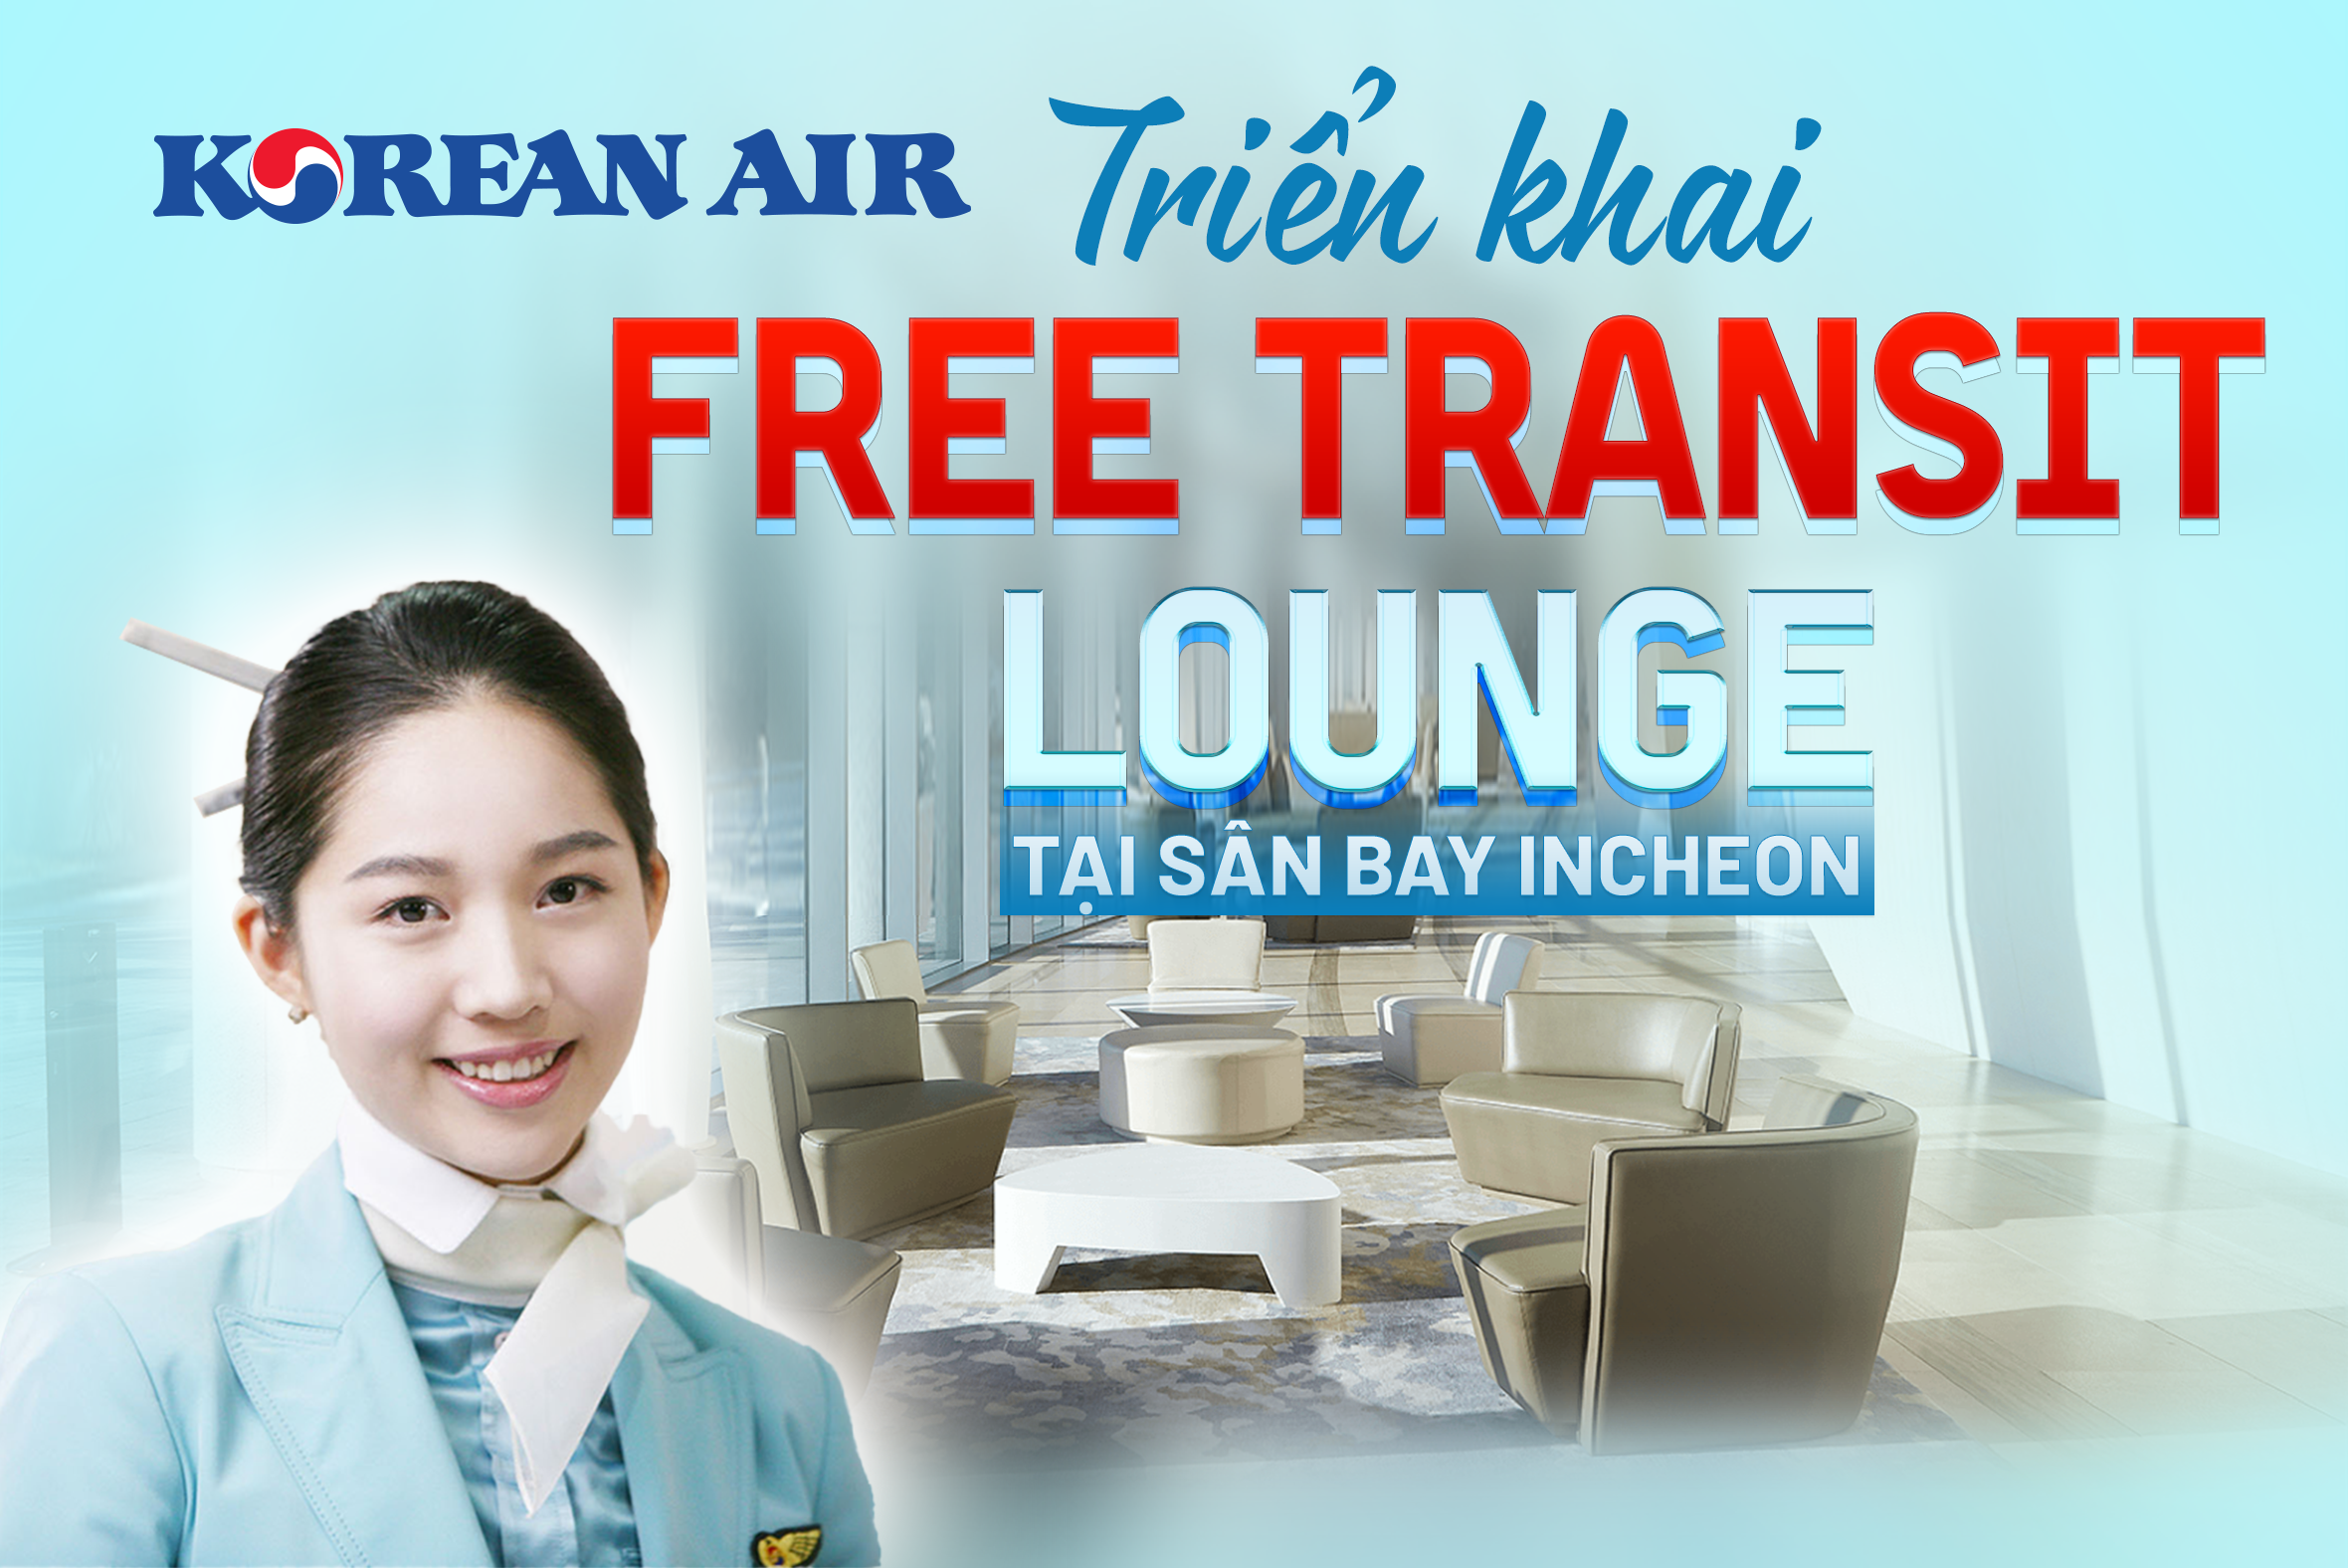 KOREAN AIR – TRIỂN KHAI CHƯƠNG TRÌNH FREE TRANSIT LOUNGE TẠI SÂN BAY INCHEON